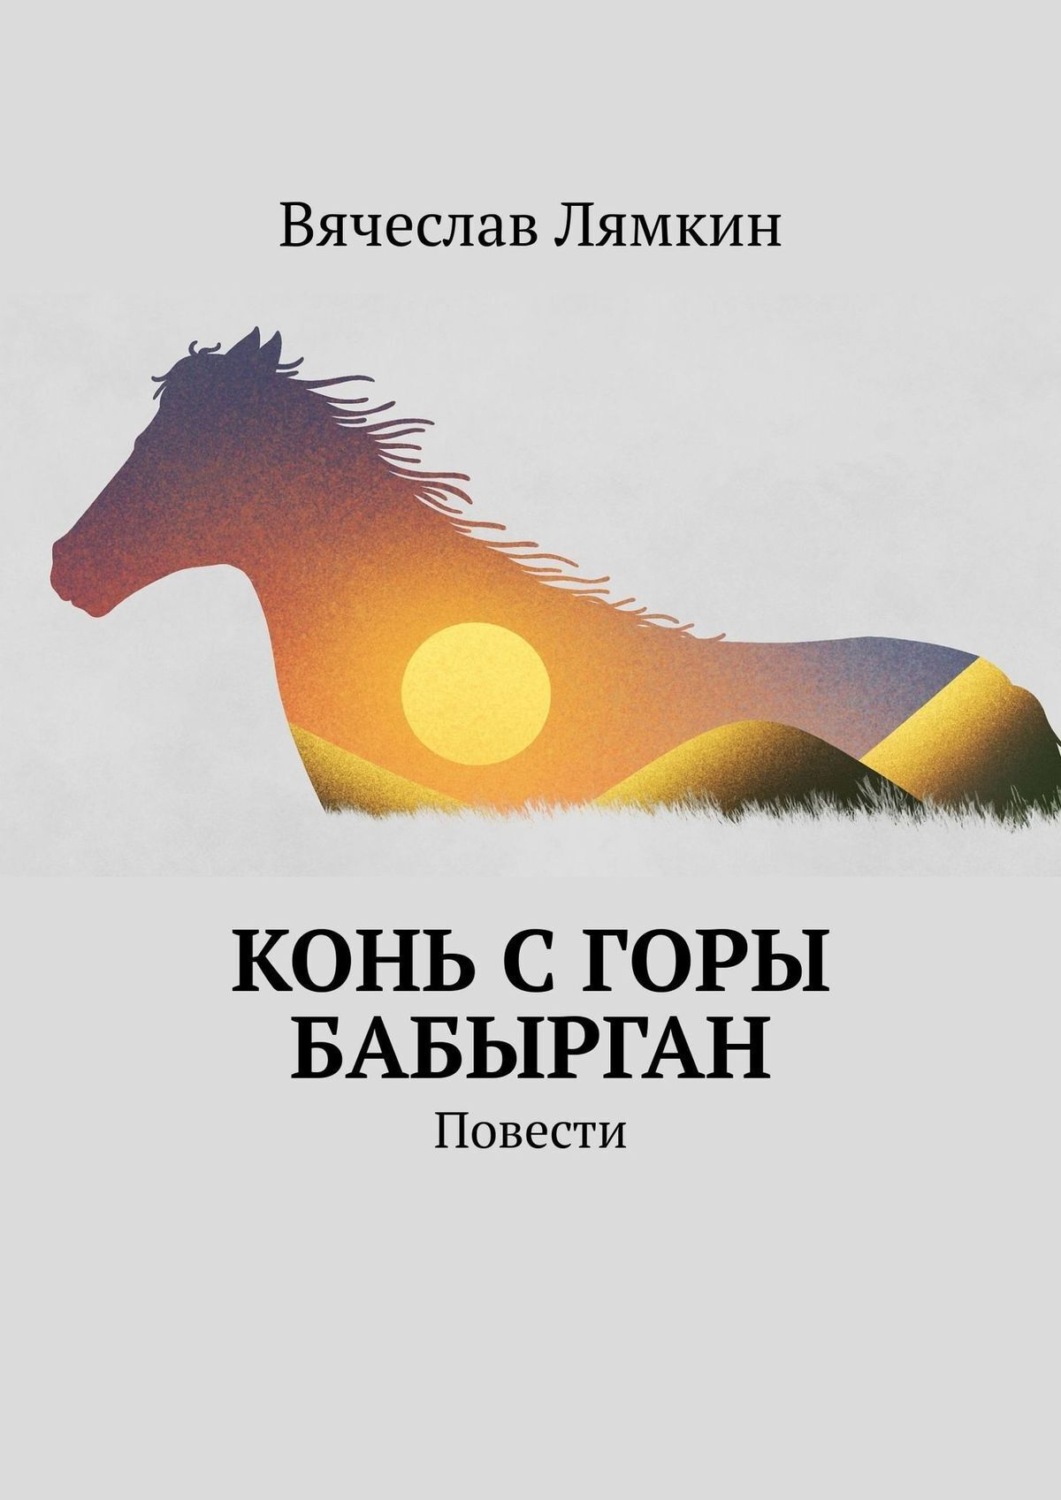 Книги про конни. Книга кони. Книги про лошадей Художественные. Книга жеребец. Конни книги.